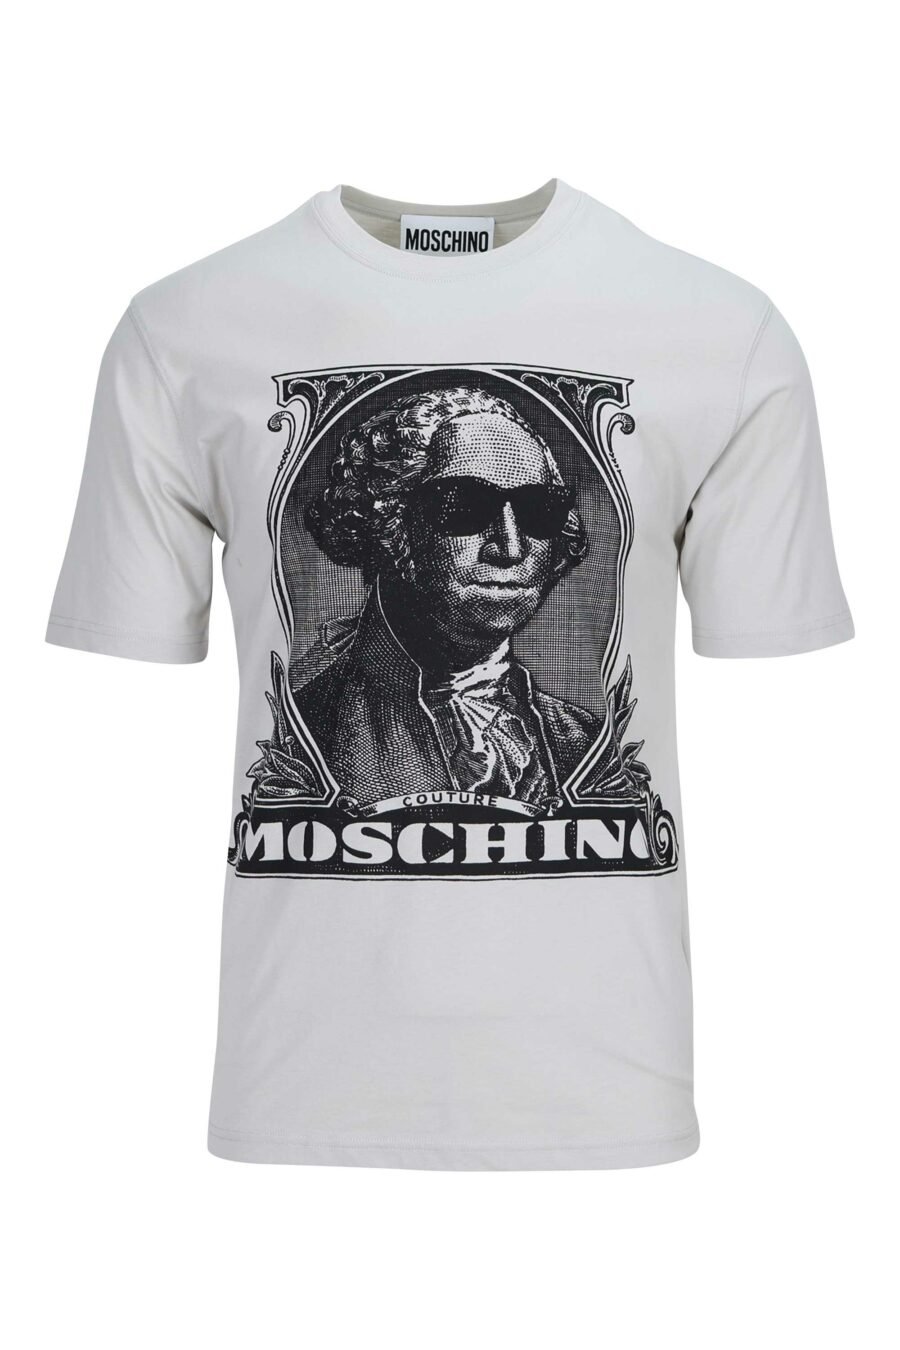 T-shirt gris avec maxilogo "Moschino" ticket - 889316954807